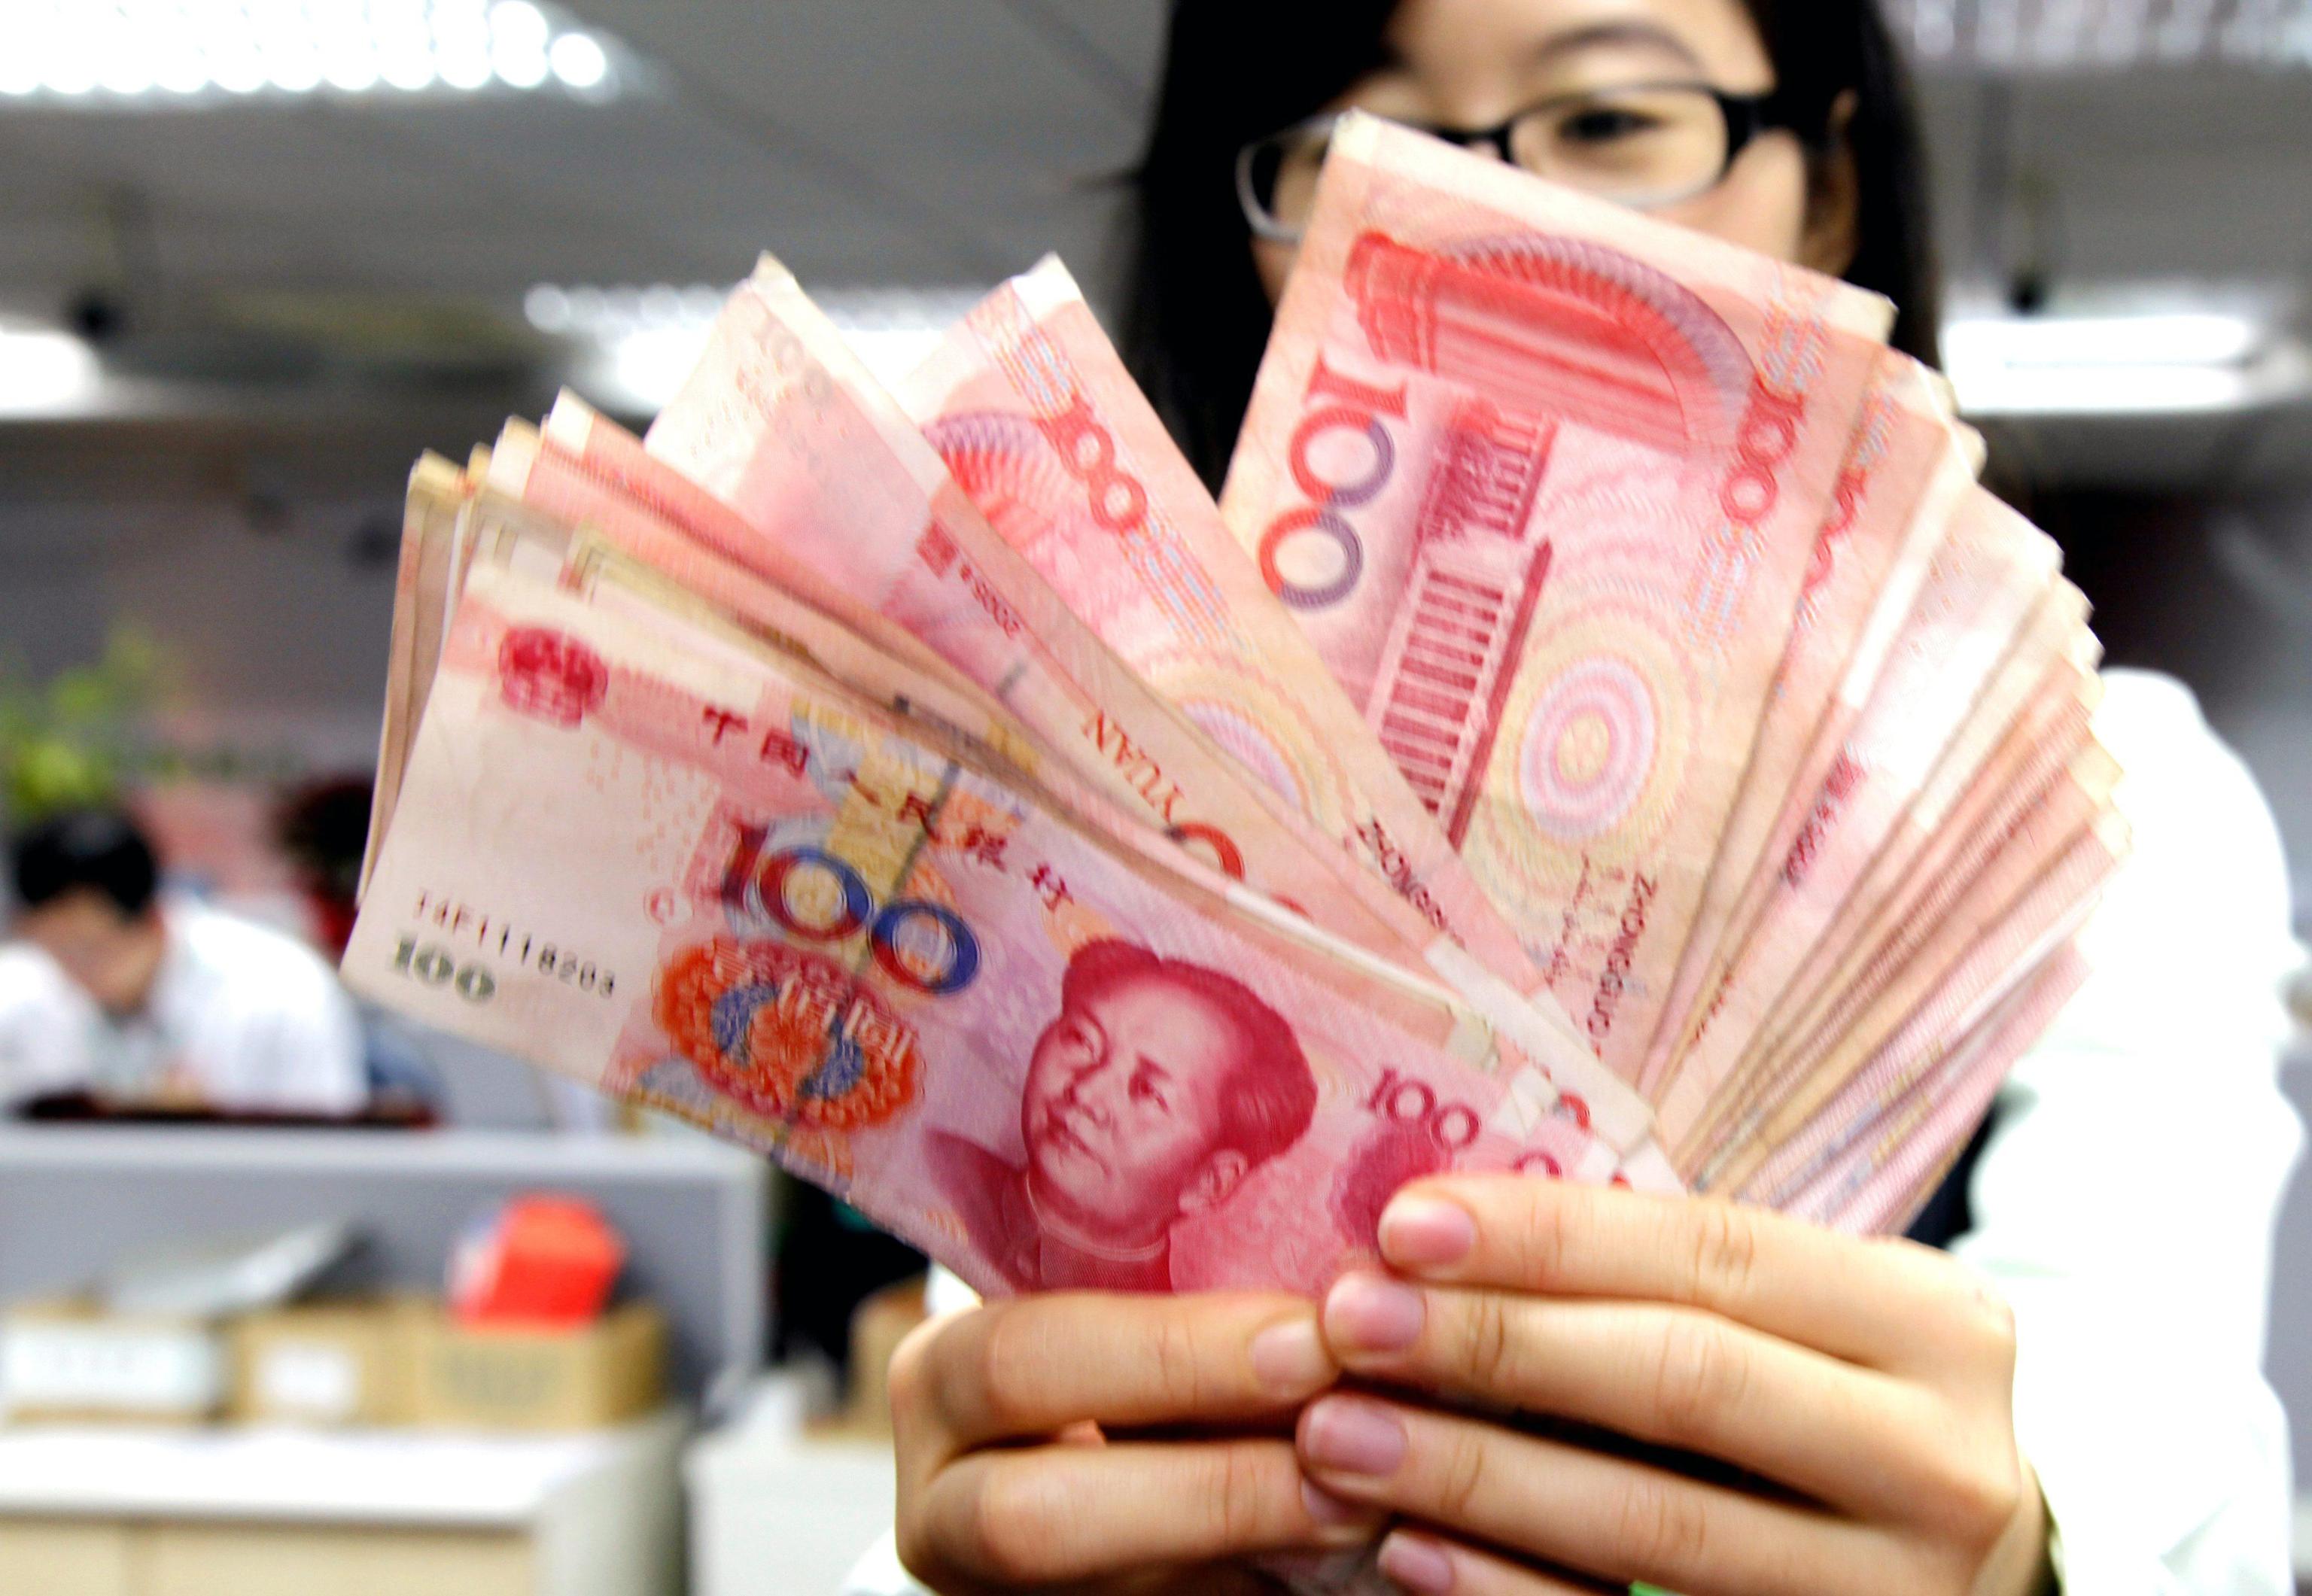 Июань. Юань. Китайский юань. Валюта Китая. Деньги юани и рубли.